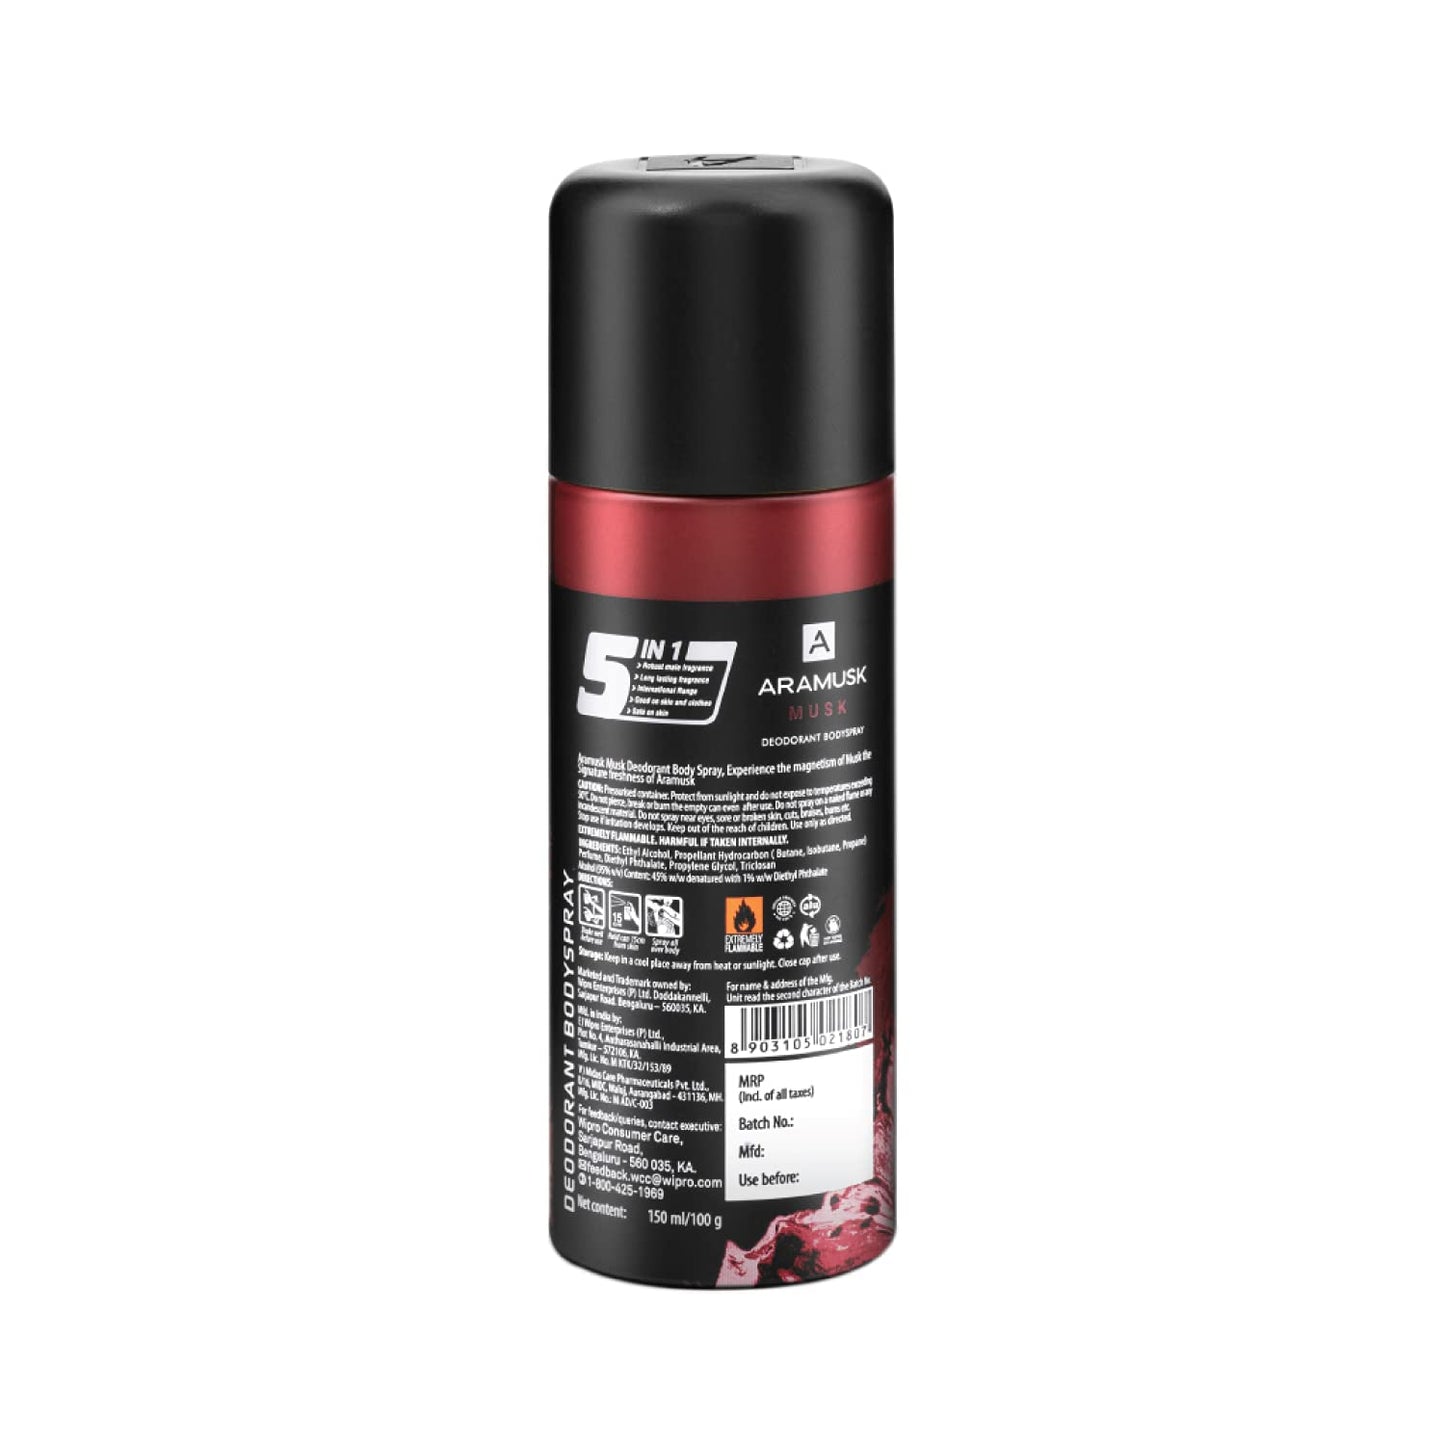 Aramusk Musk Deodorant Men Body Spray 150ml Pack Of 2